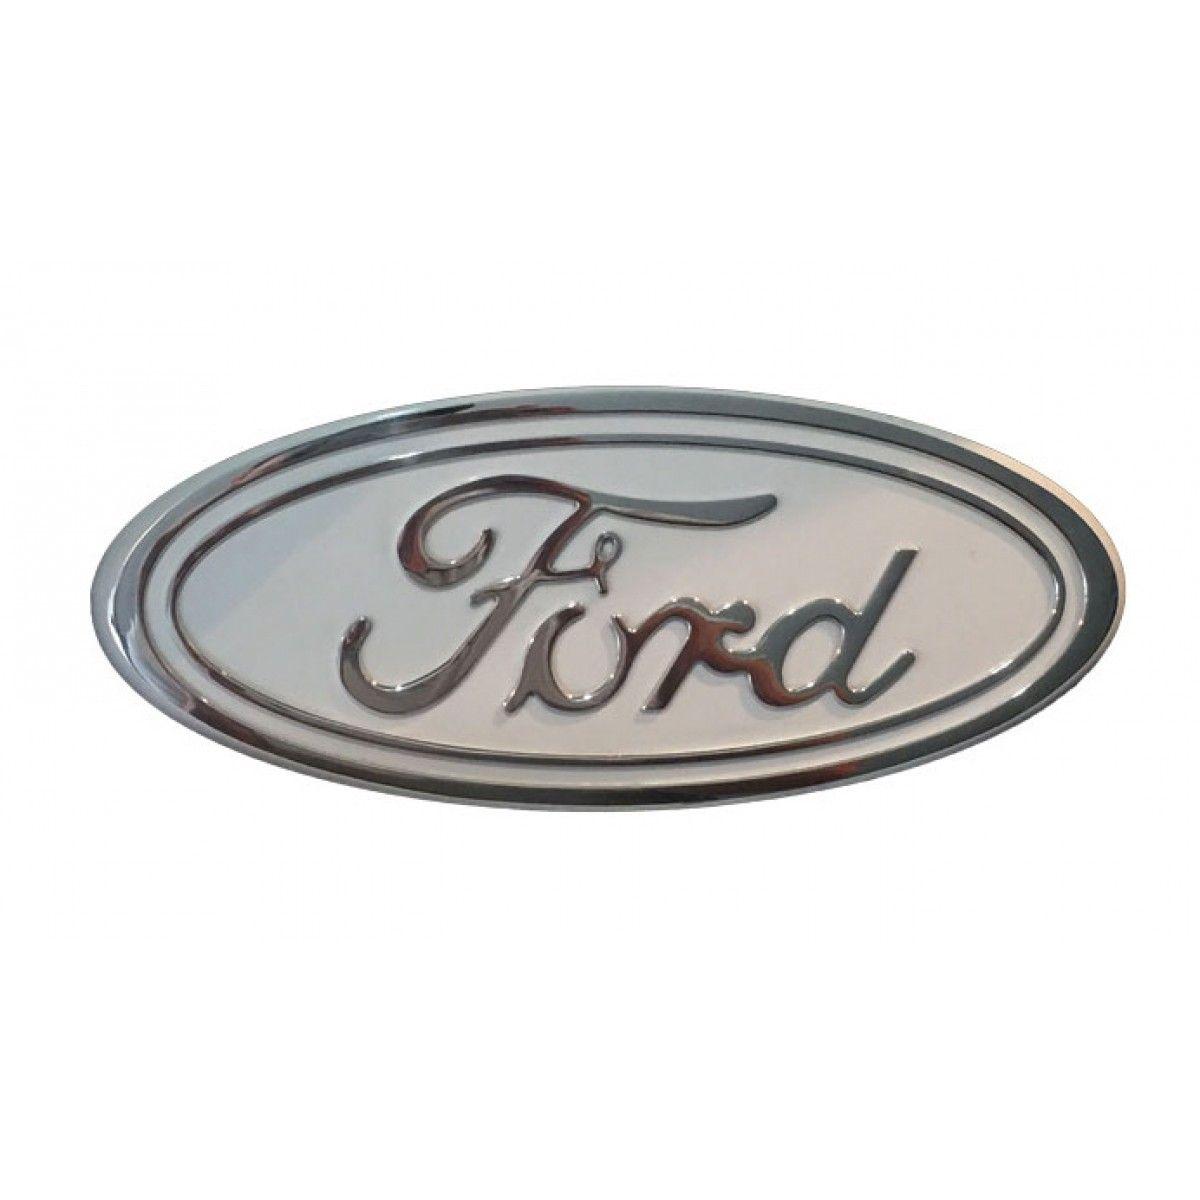 2015 Ford Logo - Ford F 150 Billet Grille & Tailgate Emblem 9 Inch White